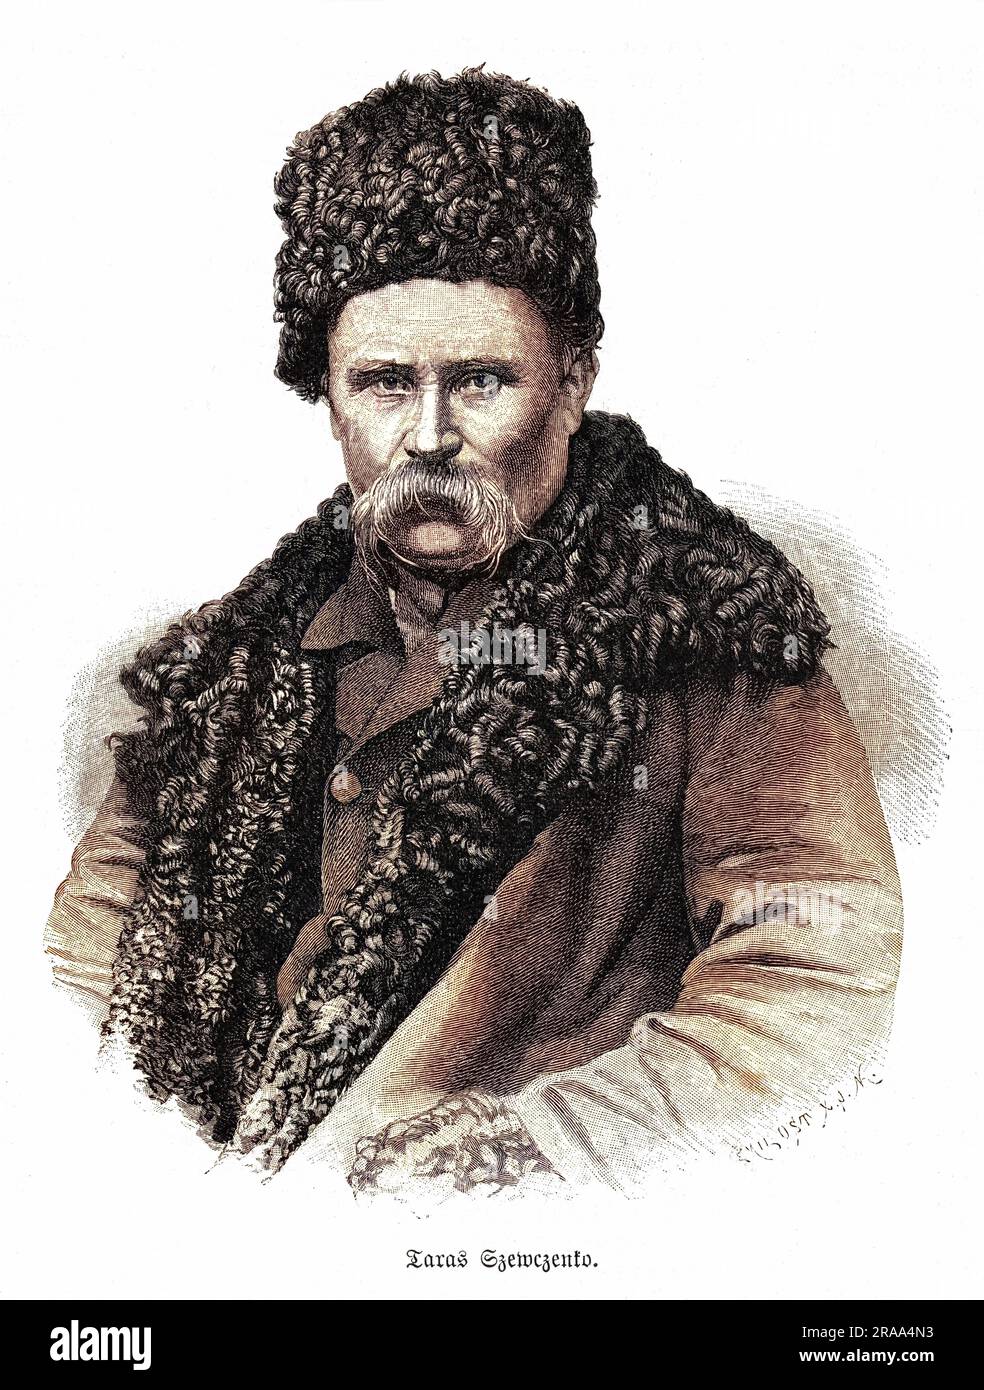 TARAS GRIGORIVICH SZEWCZENKO (or Szevczenko) (1814 - 1861), Ukrainian writer and artist, generally reckoned his country's greatest literary figure. Stock Photo